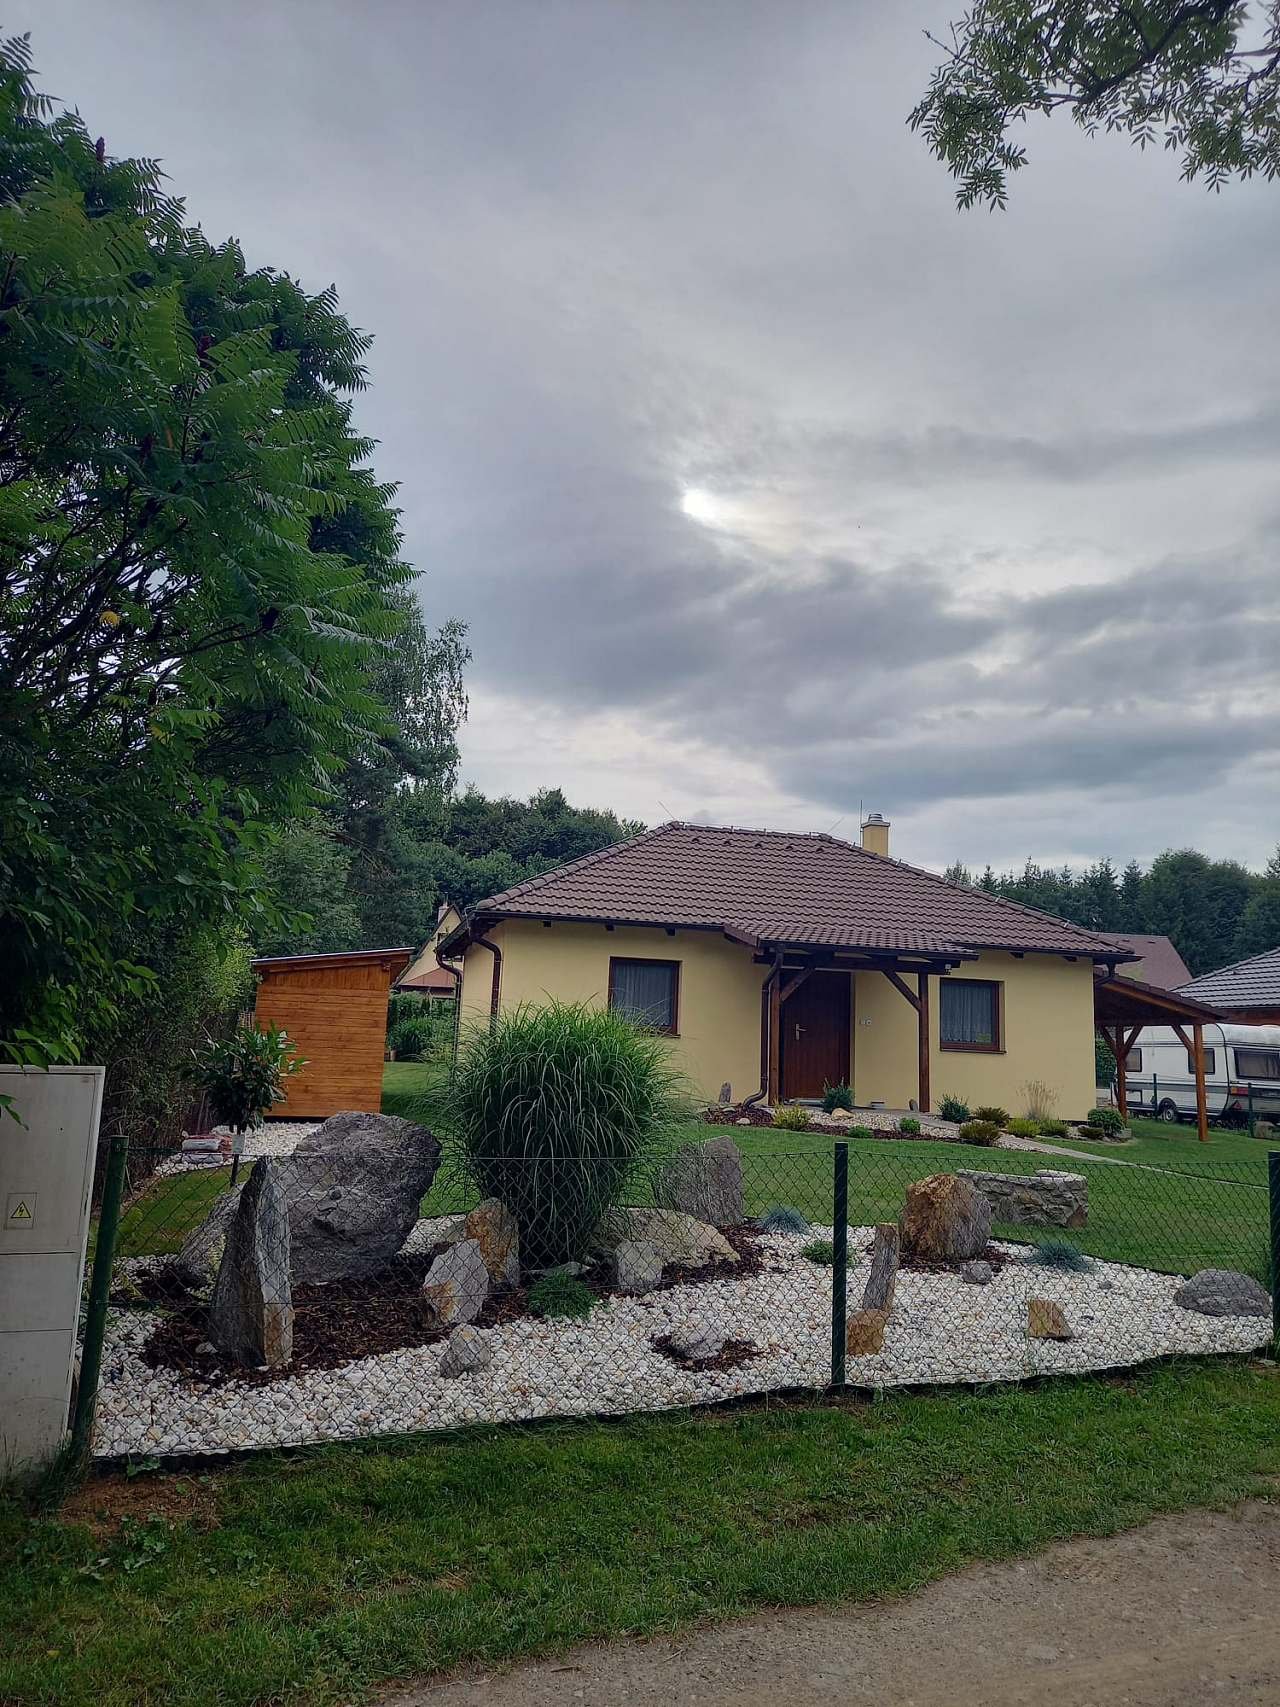 Sudoměřice Tábor mellett